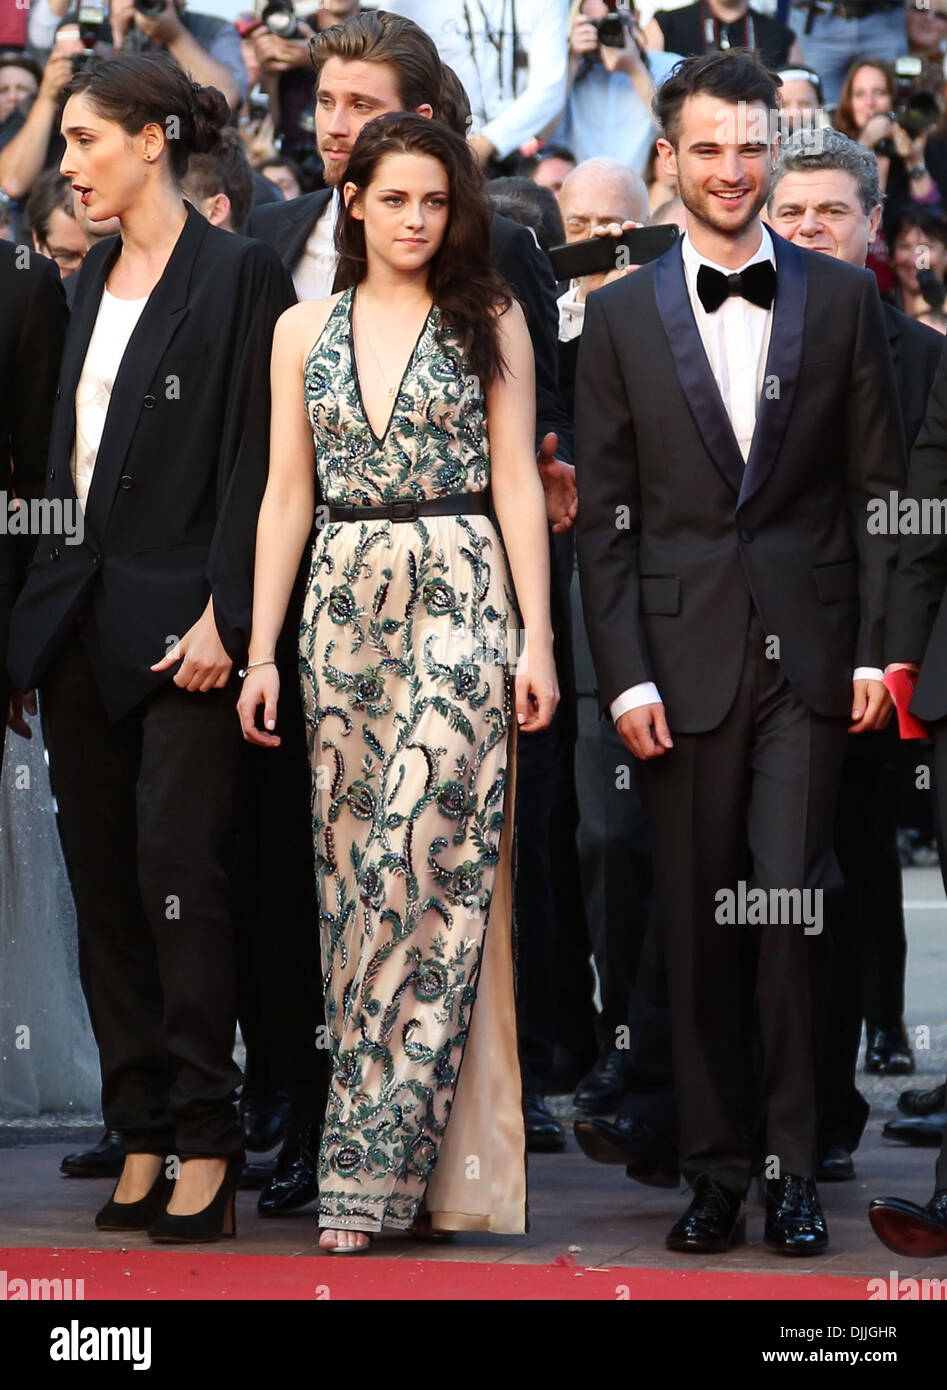 Tom Sturridge Kristen Stewart 'En el camino' premiere durante el 65º Festival de Cannes Cannes Francia - 23.05.12 Foto de stock